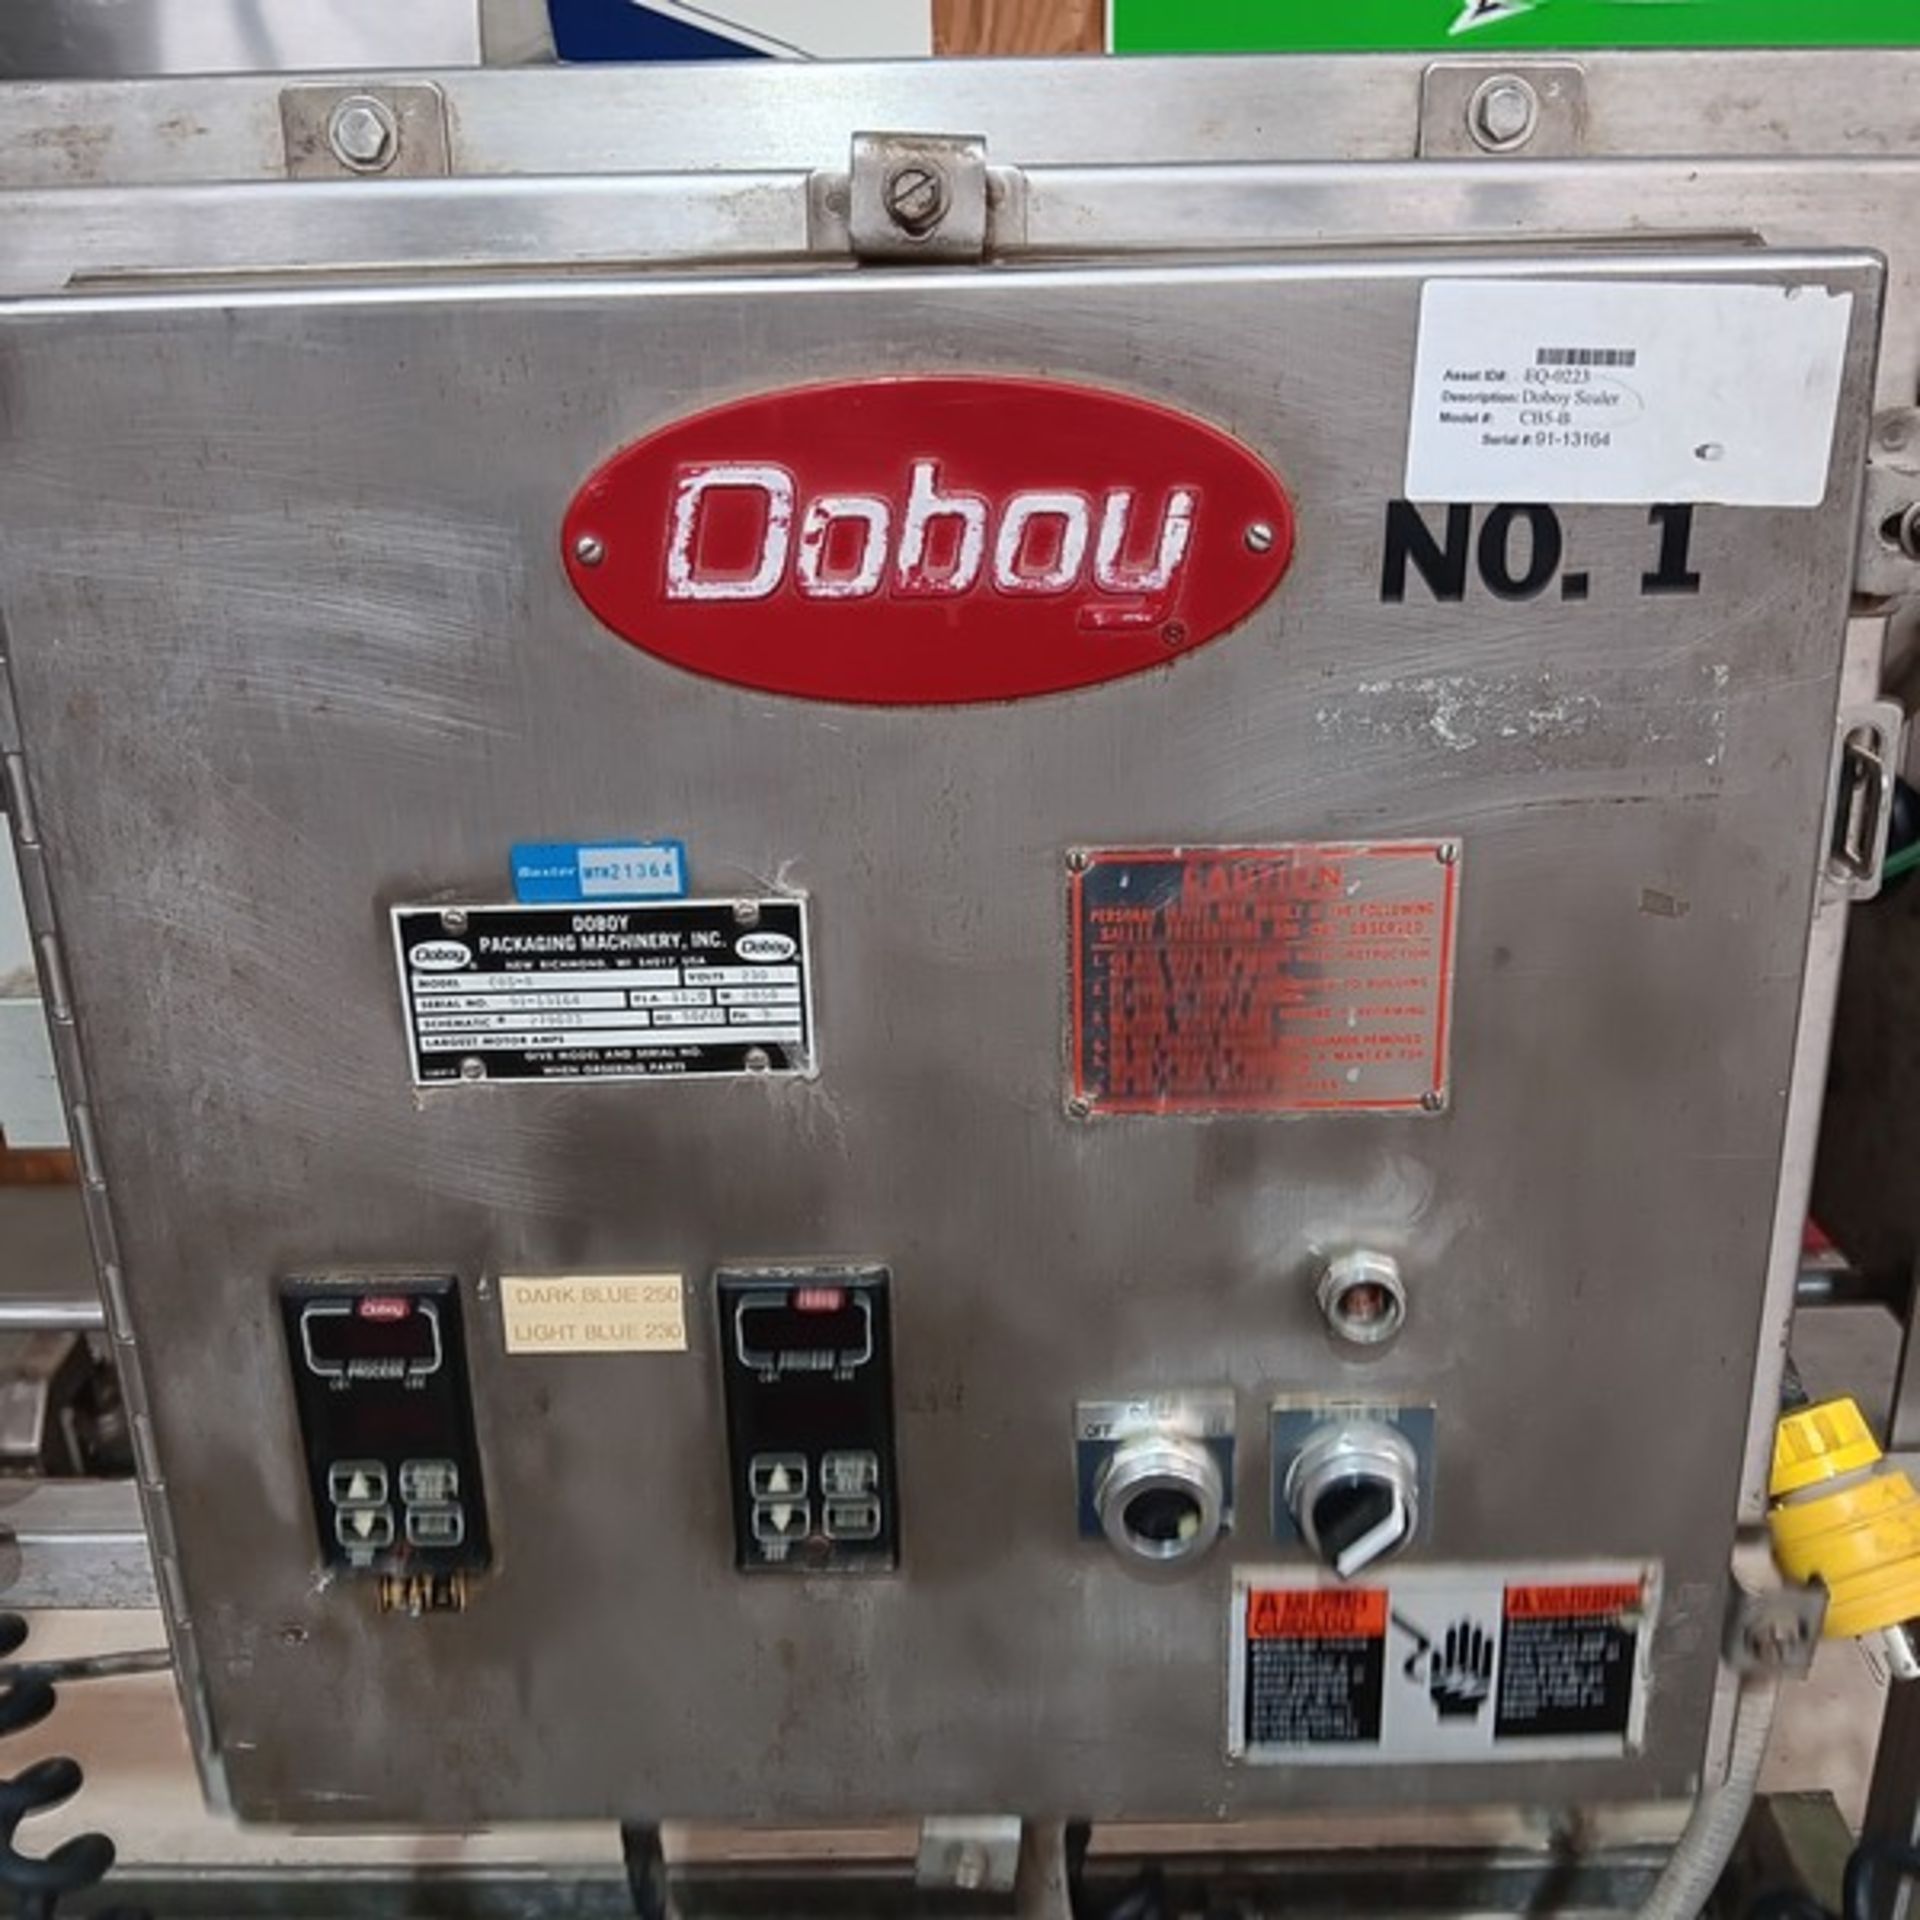 Doboy High Speed Continuous Band Bag Sealer Model CB5-B, S/N 91-13164, Volt 230, 3 Phase, Casters, - Bild 4 aus 5